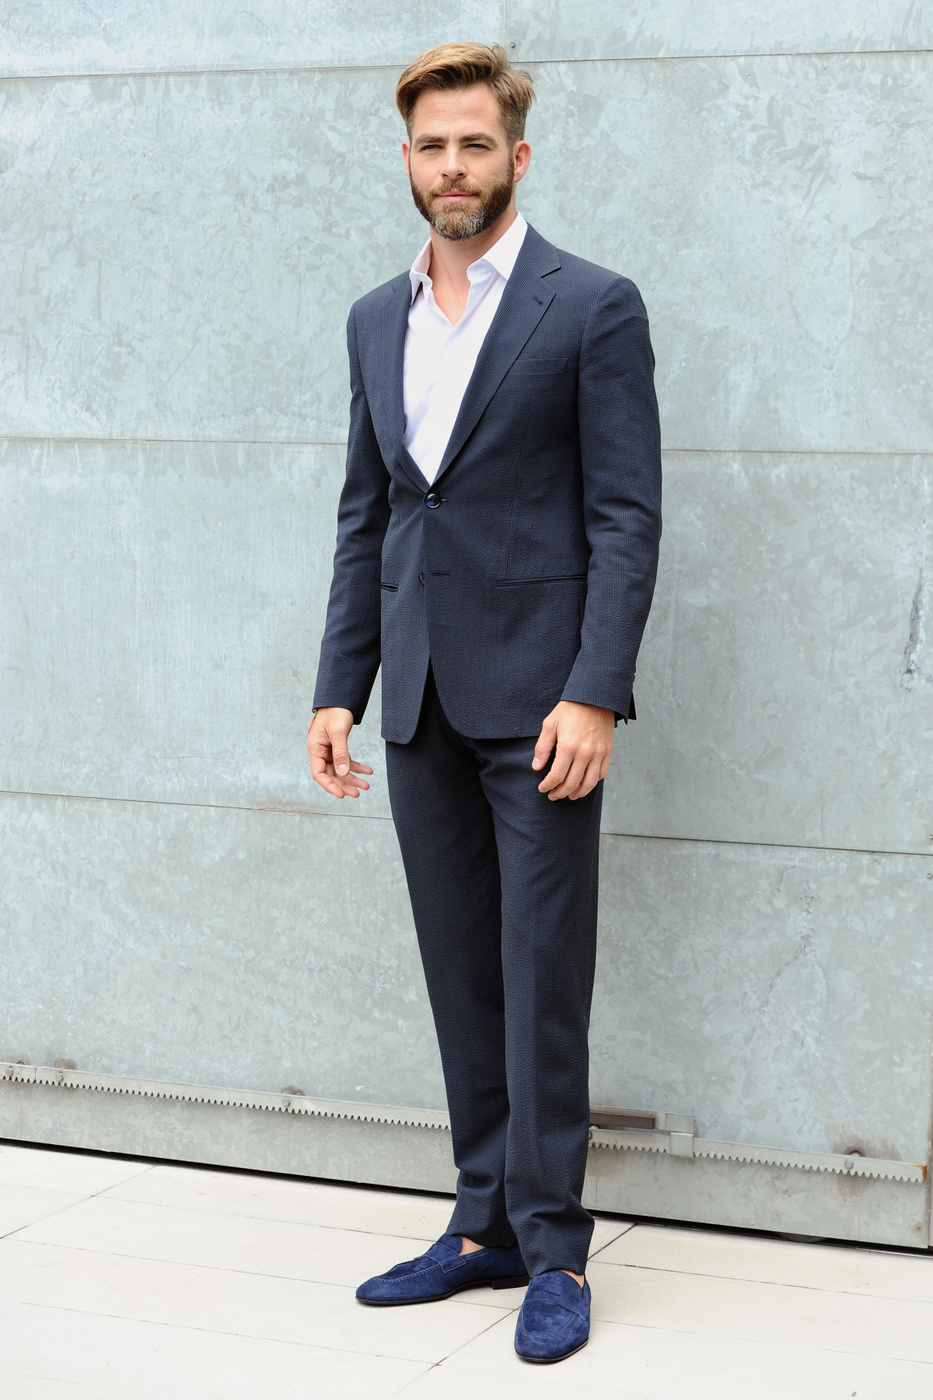 Chris Pine attends Giorgio Armani show during Milan Menswear Fashion Week Spring Summer 2015 in Milan